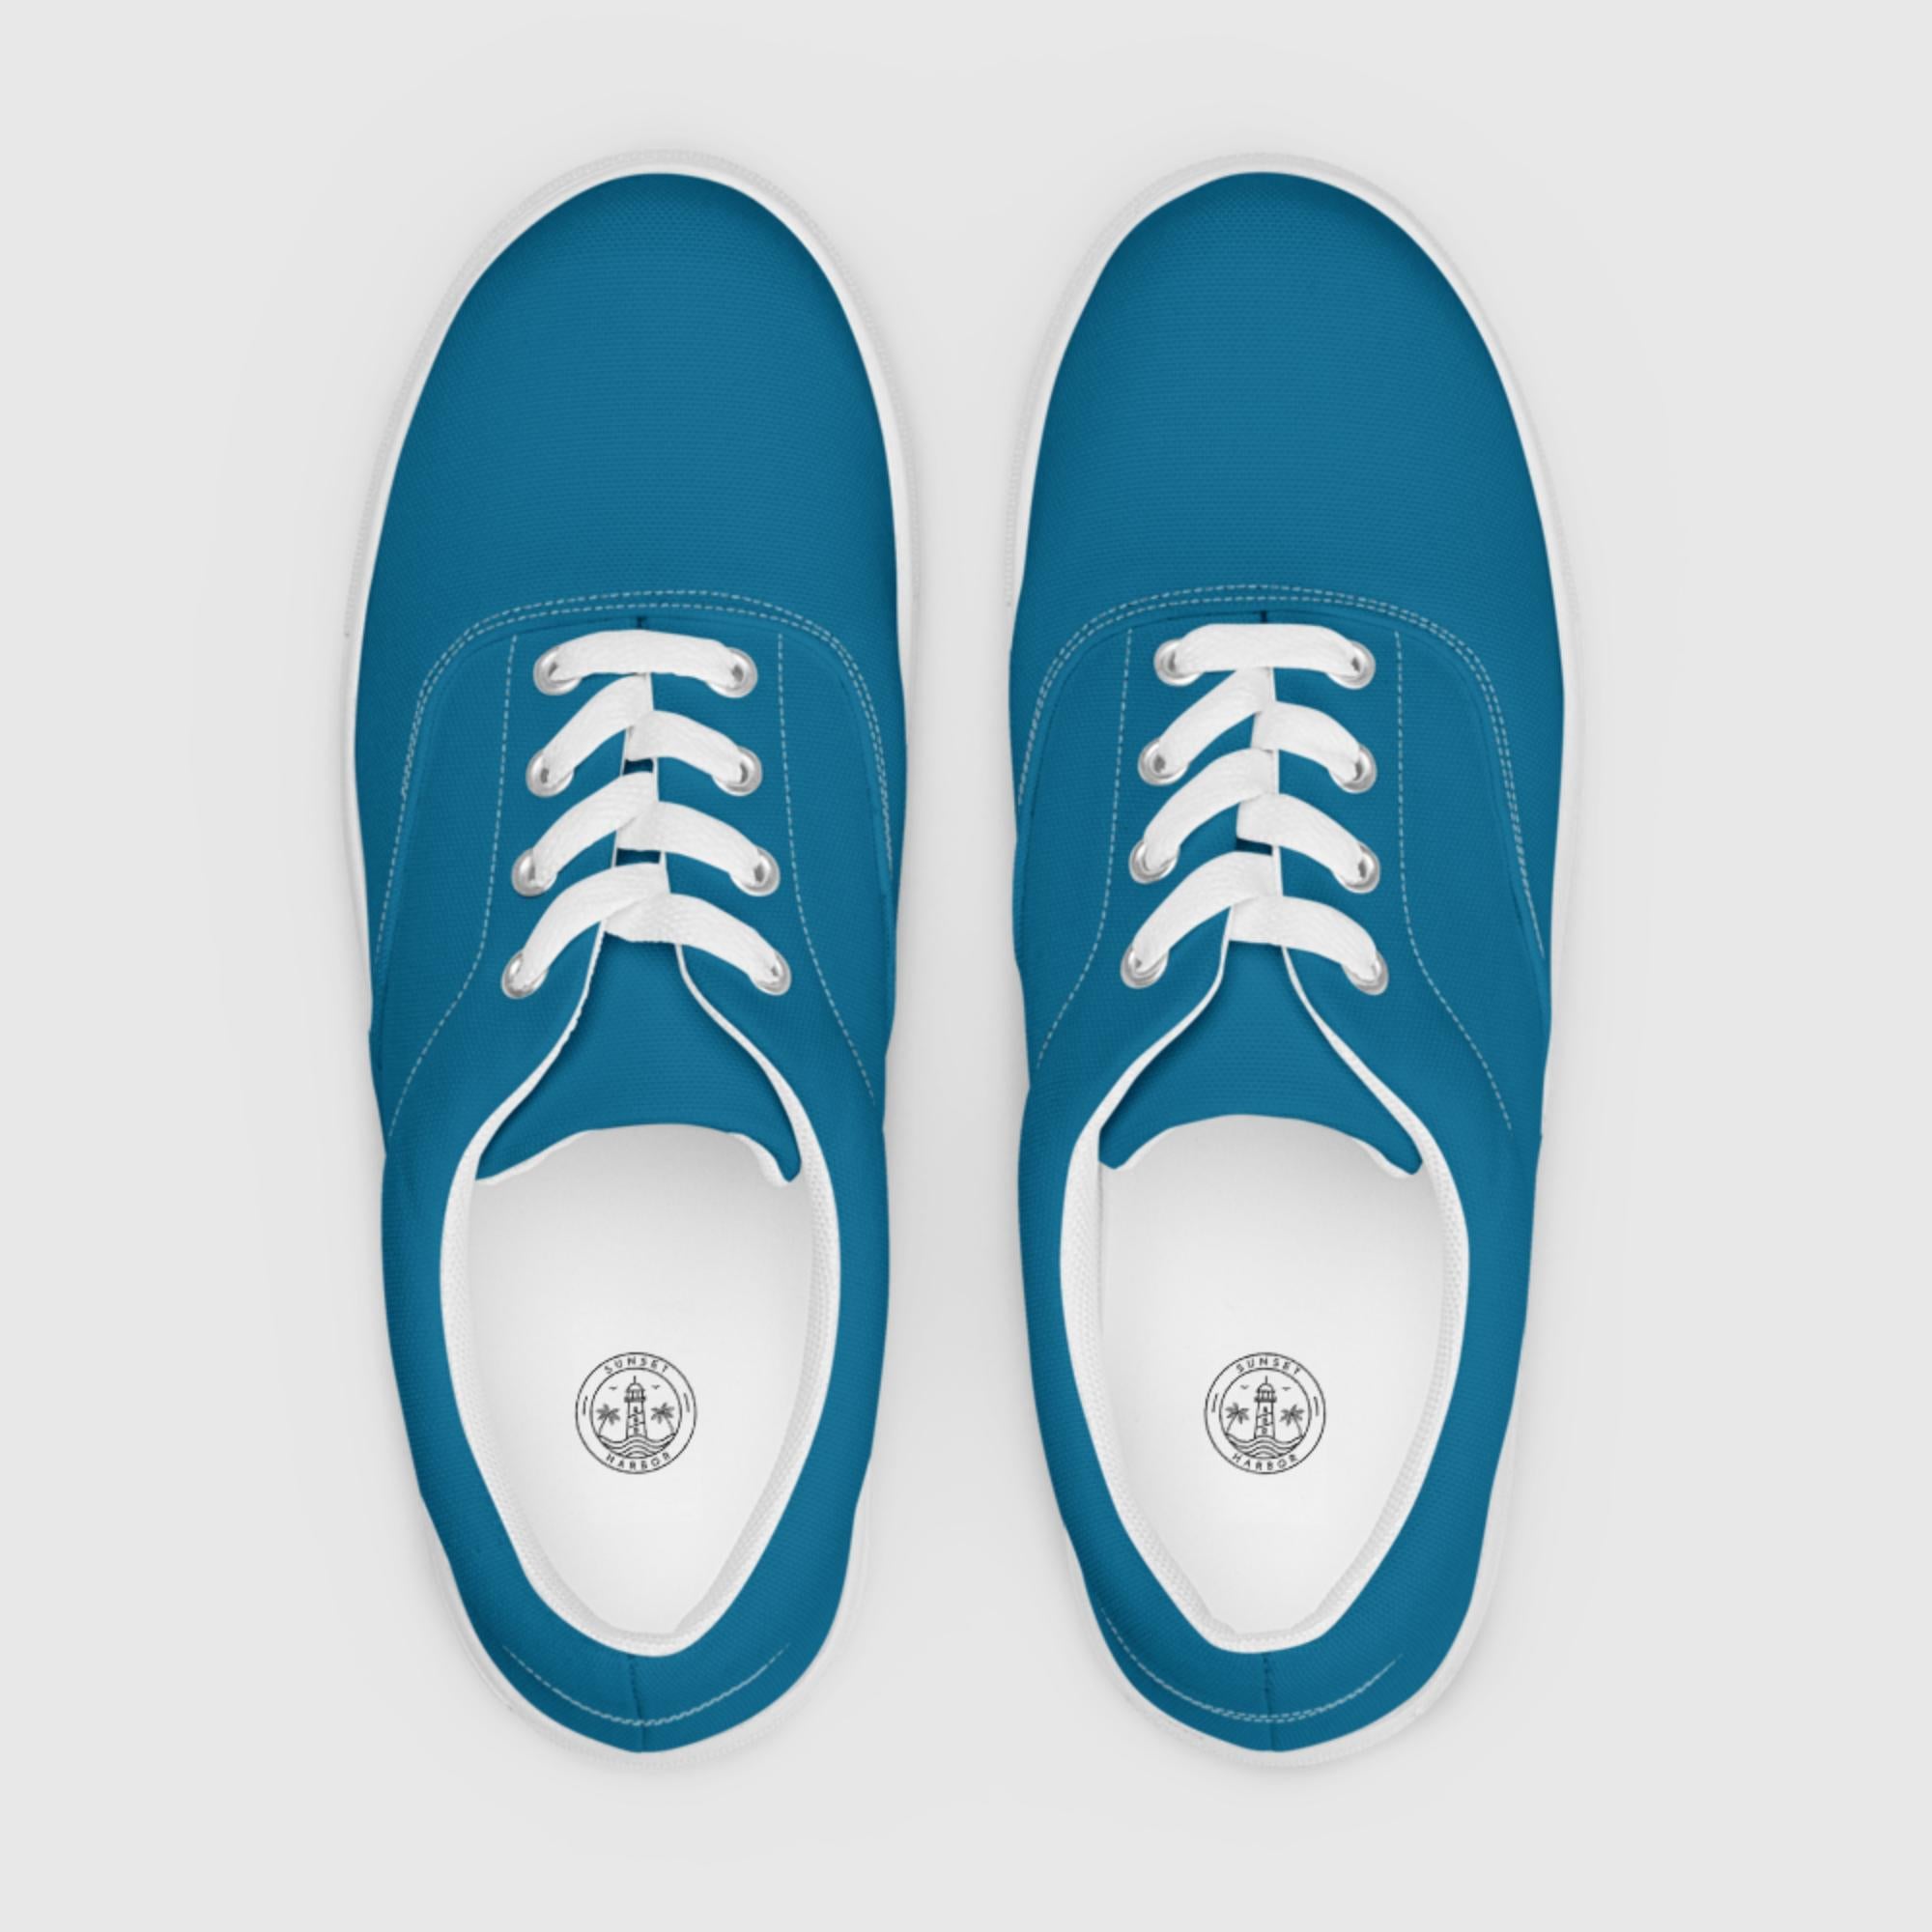 Men’s lace-up canvas shoes - Cerulean Blue - Sunset Harbor Clothing